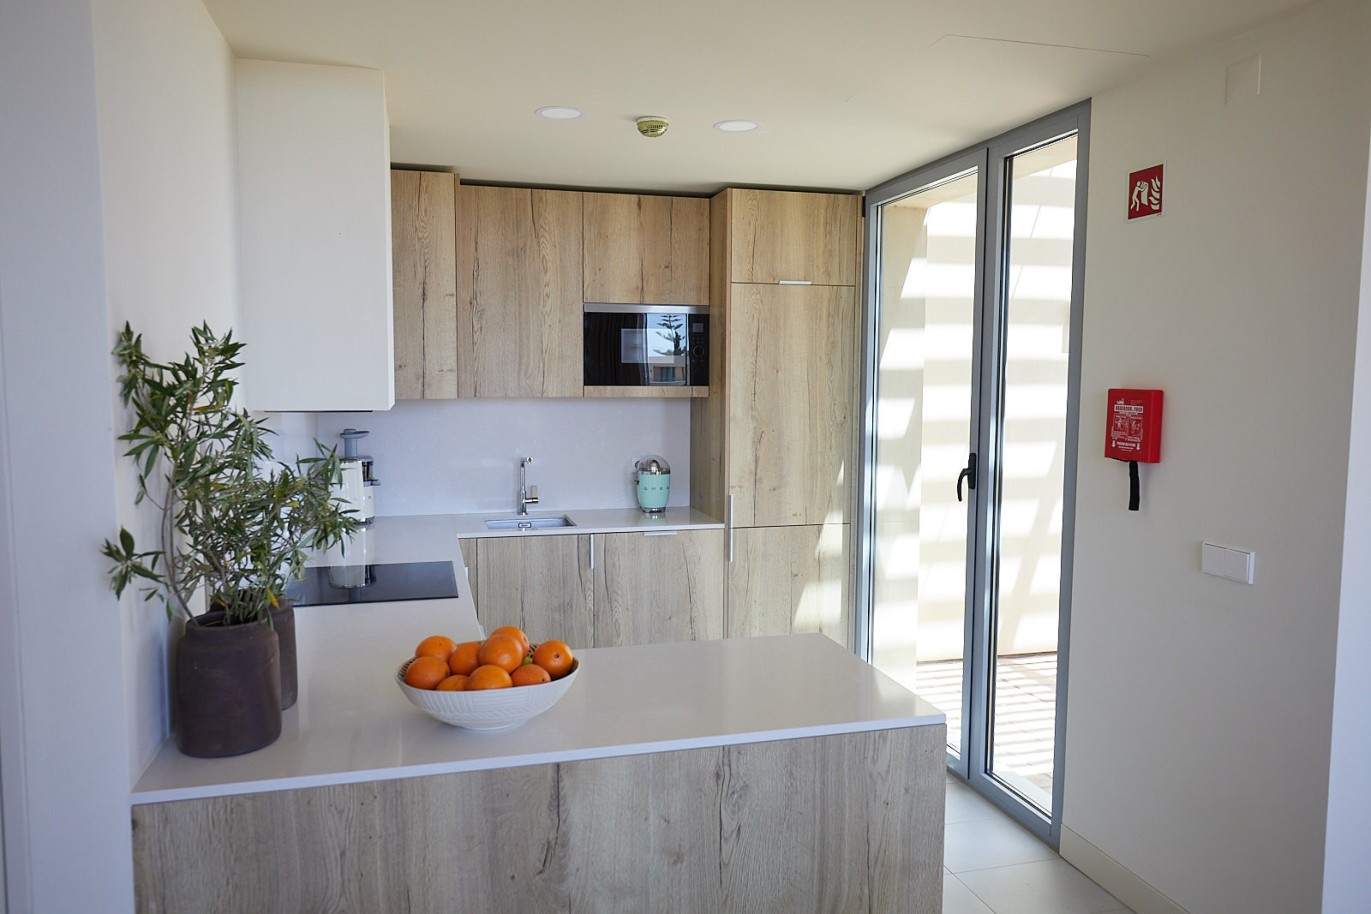 3 bedroom apartment in resort, for sale in Porches, Algarve_228614